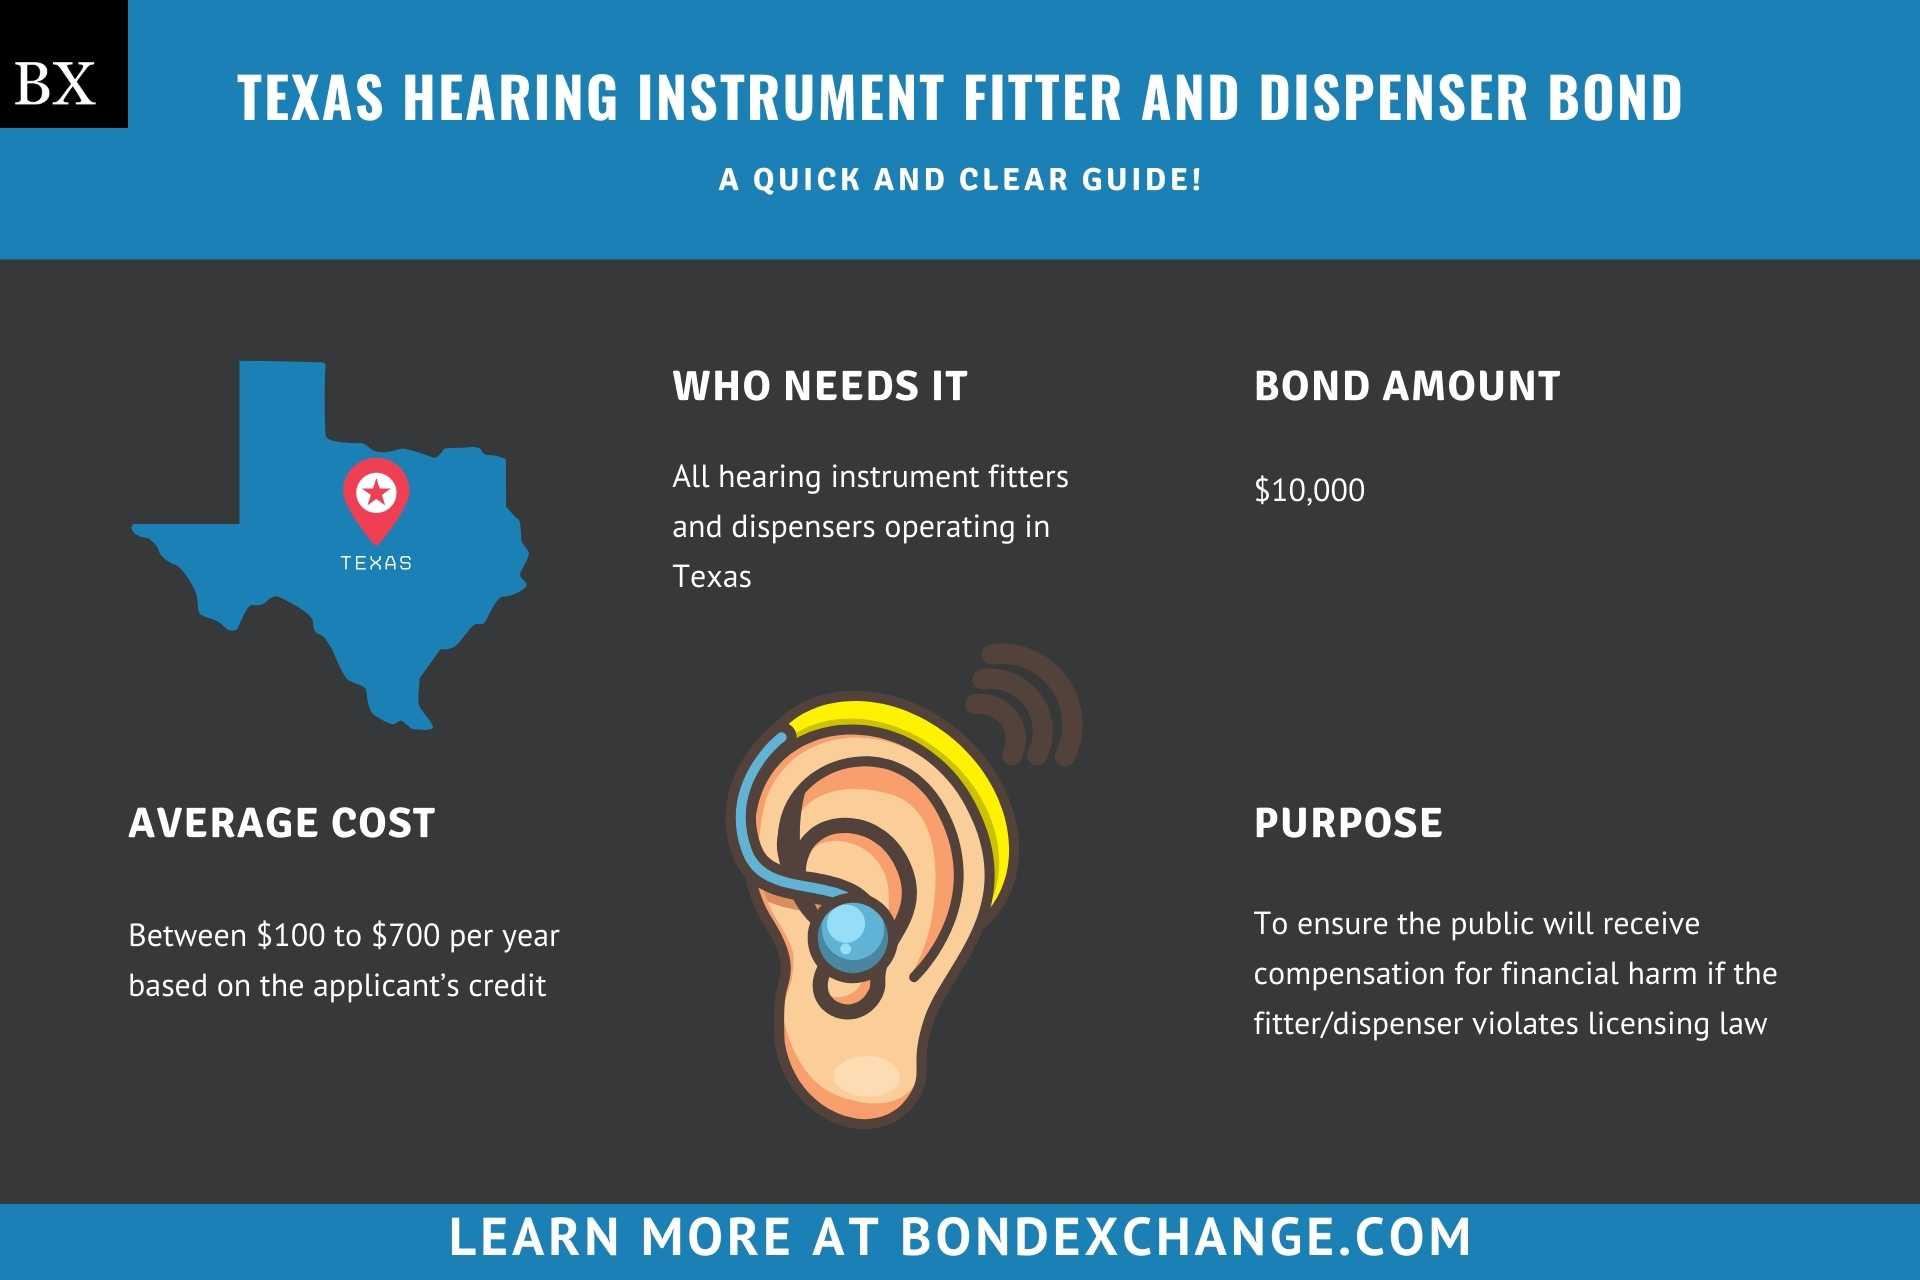 Texas Hearing Instrument Fitter and Dispenser Bond